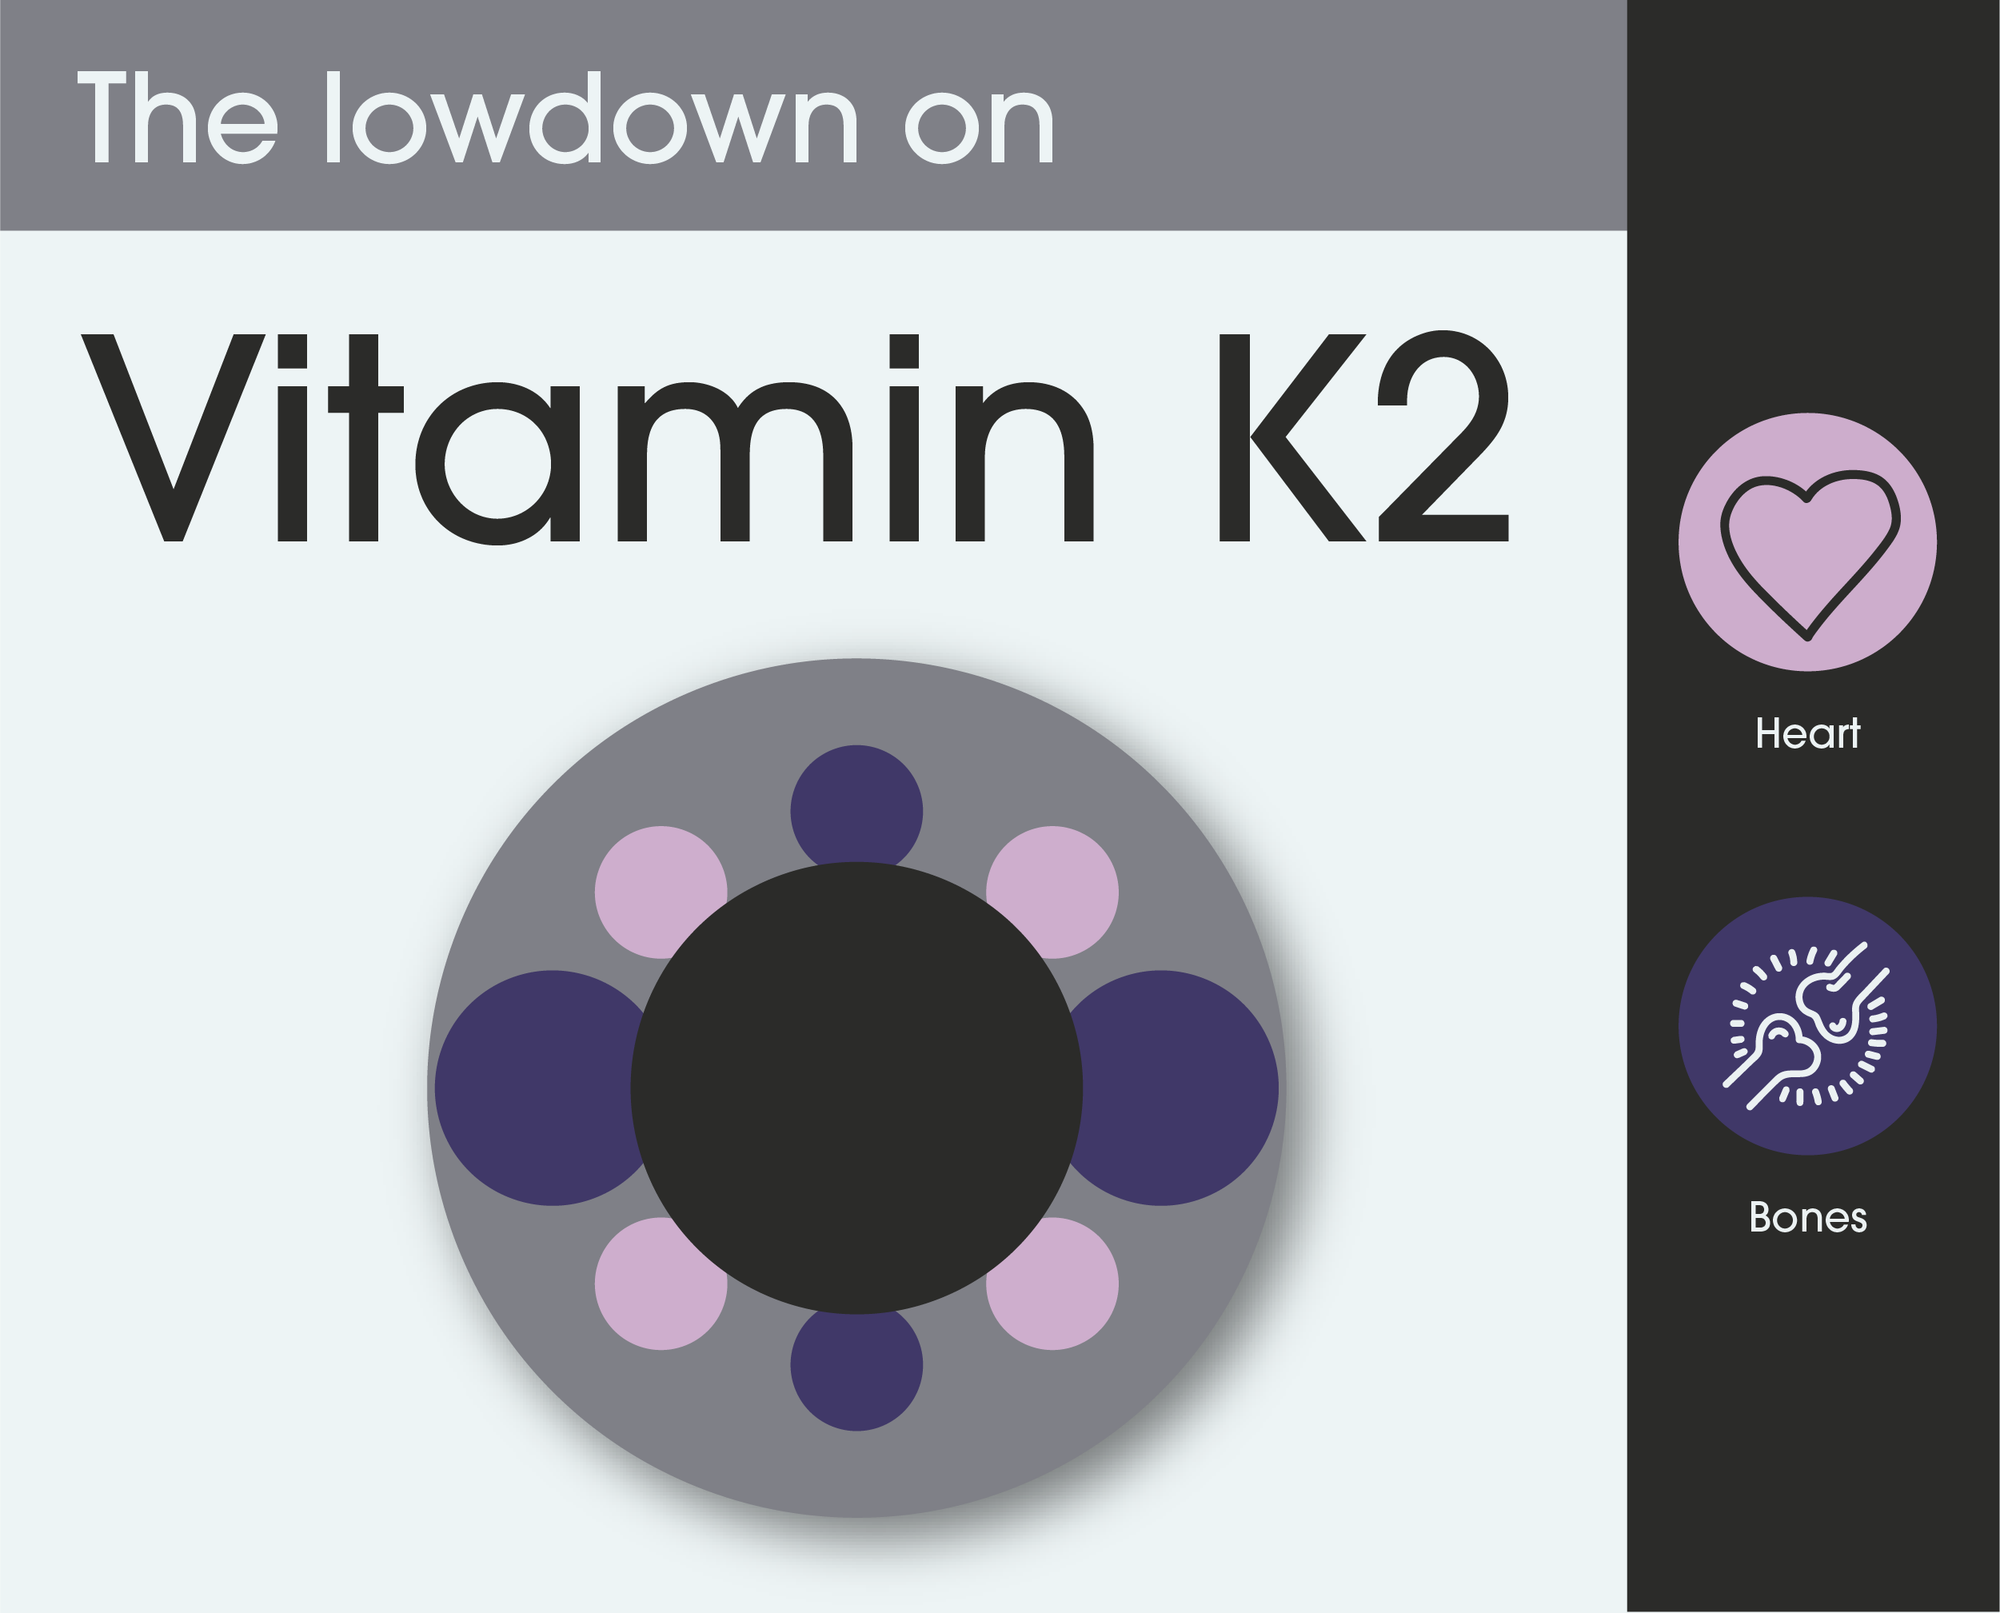 The lowdown on Vitamin K2